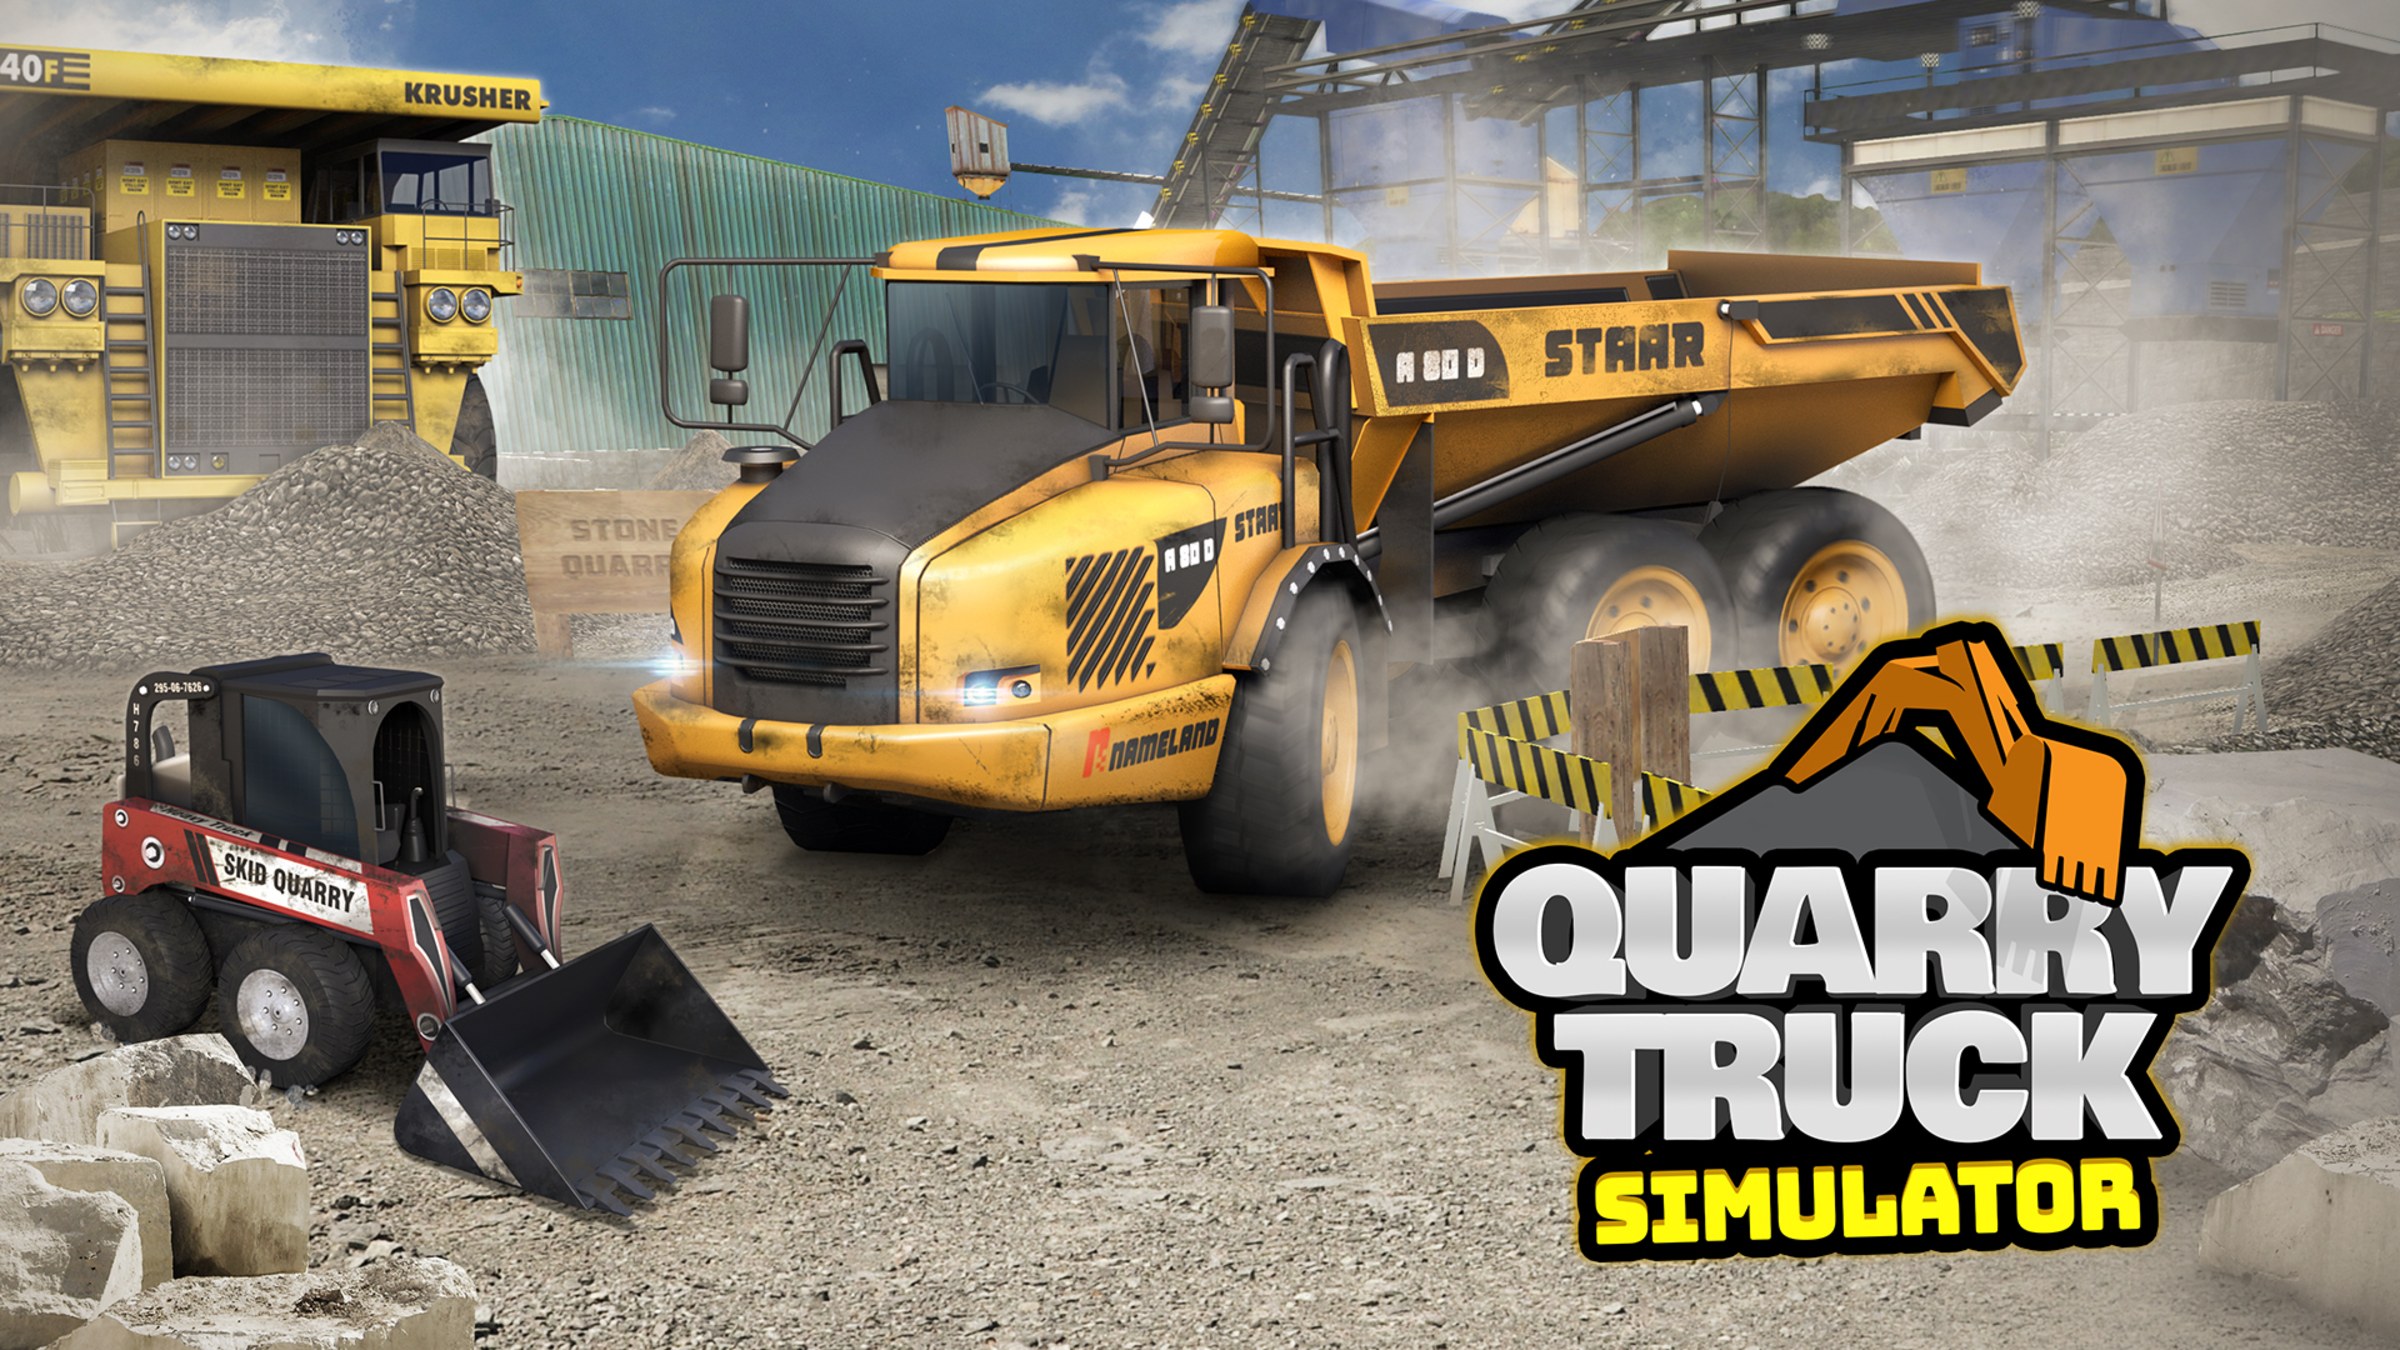 eftertiden Fortrolig temperatur Quarry Truck Simulator for Nintendo Switch - Nintendo Official Site